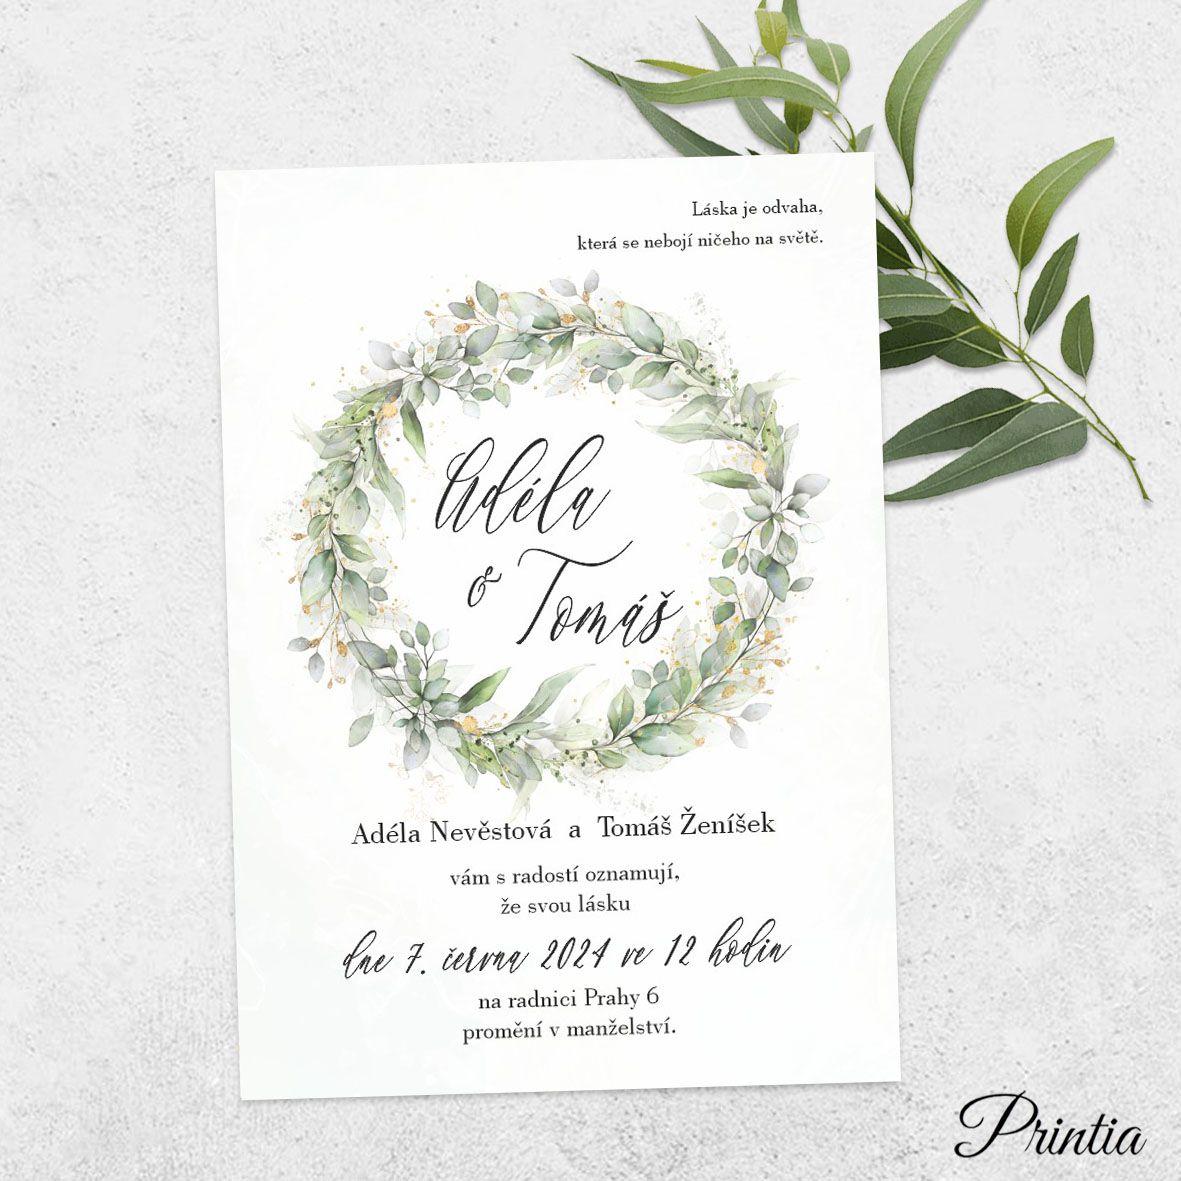 Wedding invitation with eucalyptus wreath